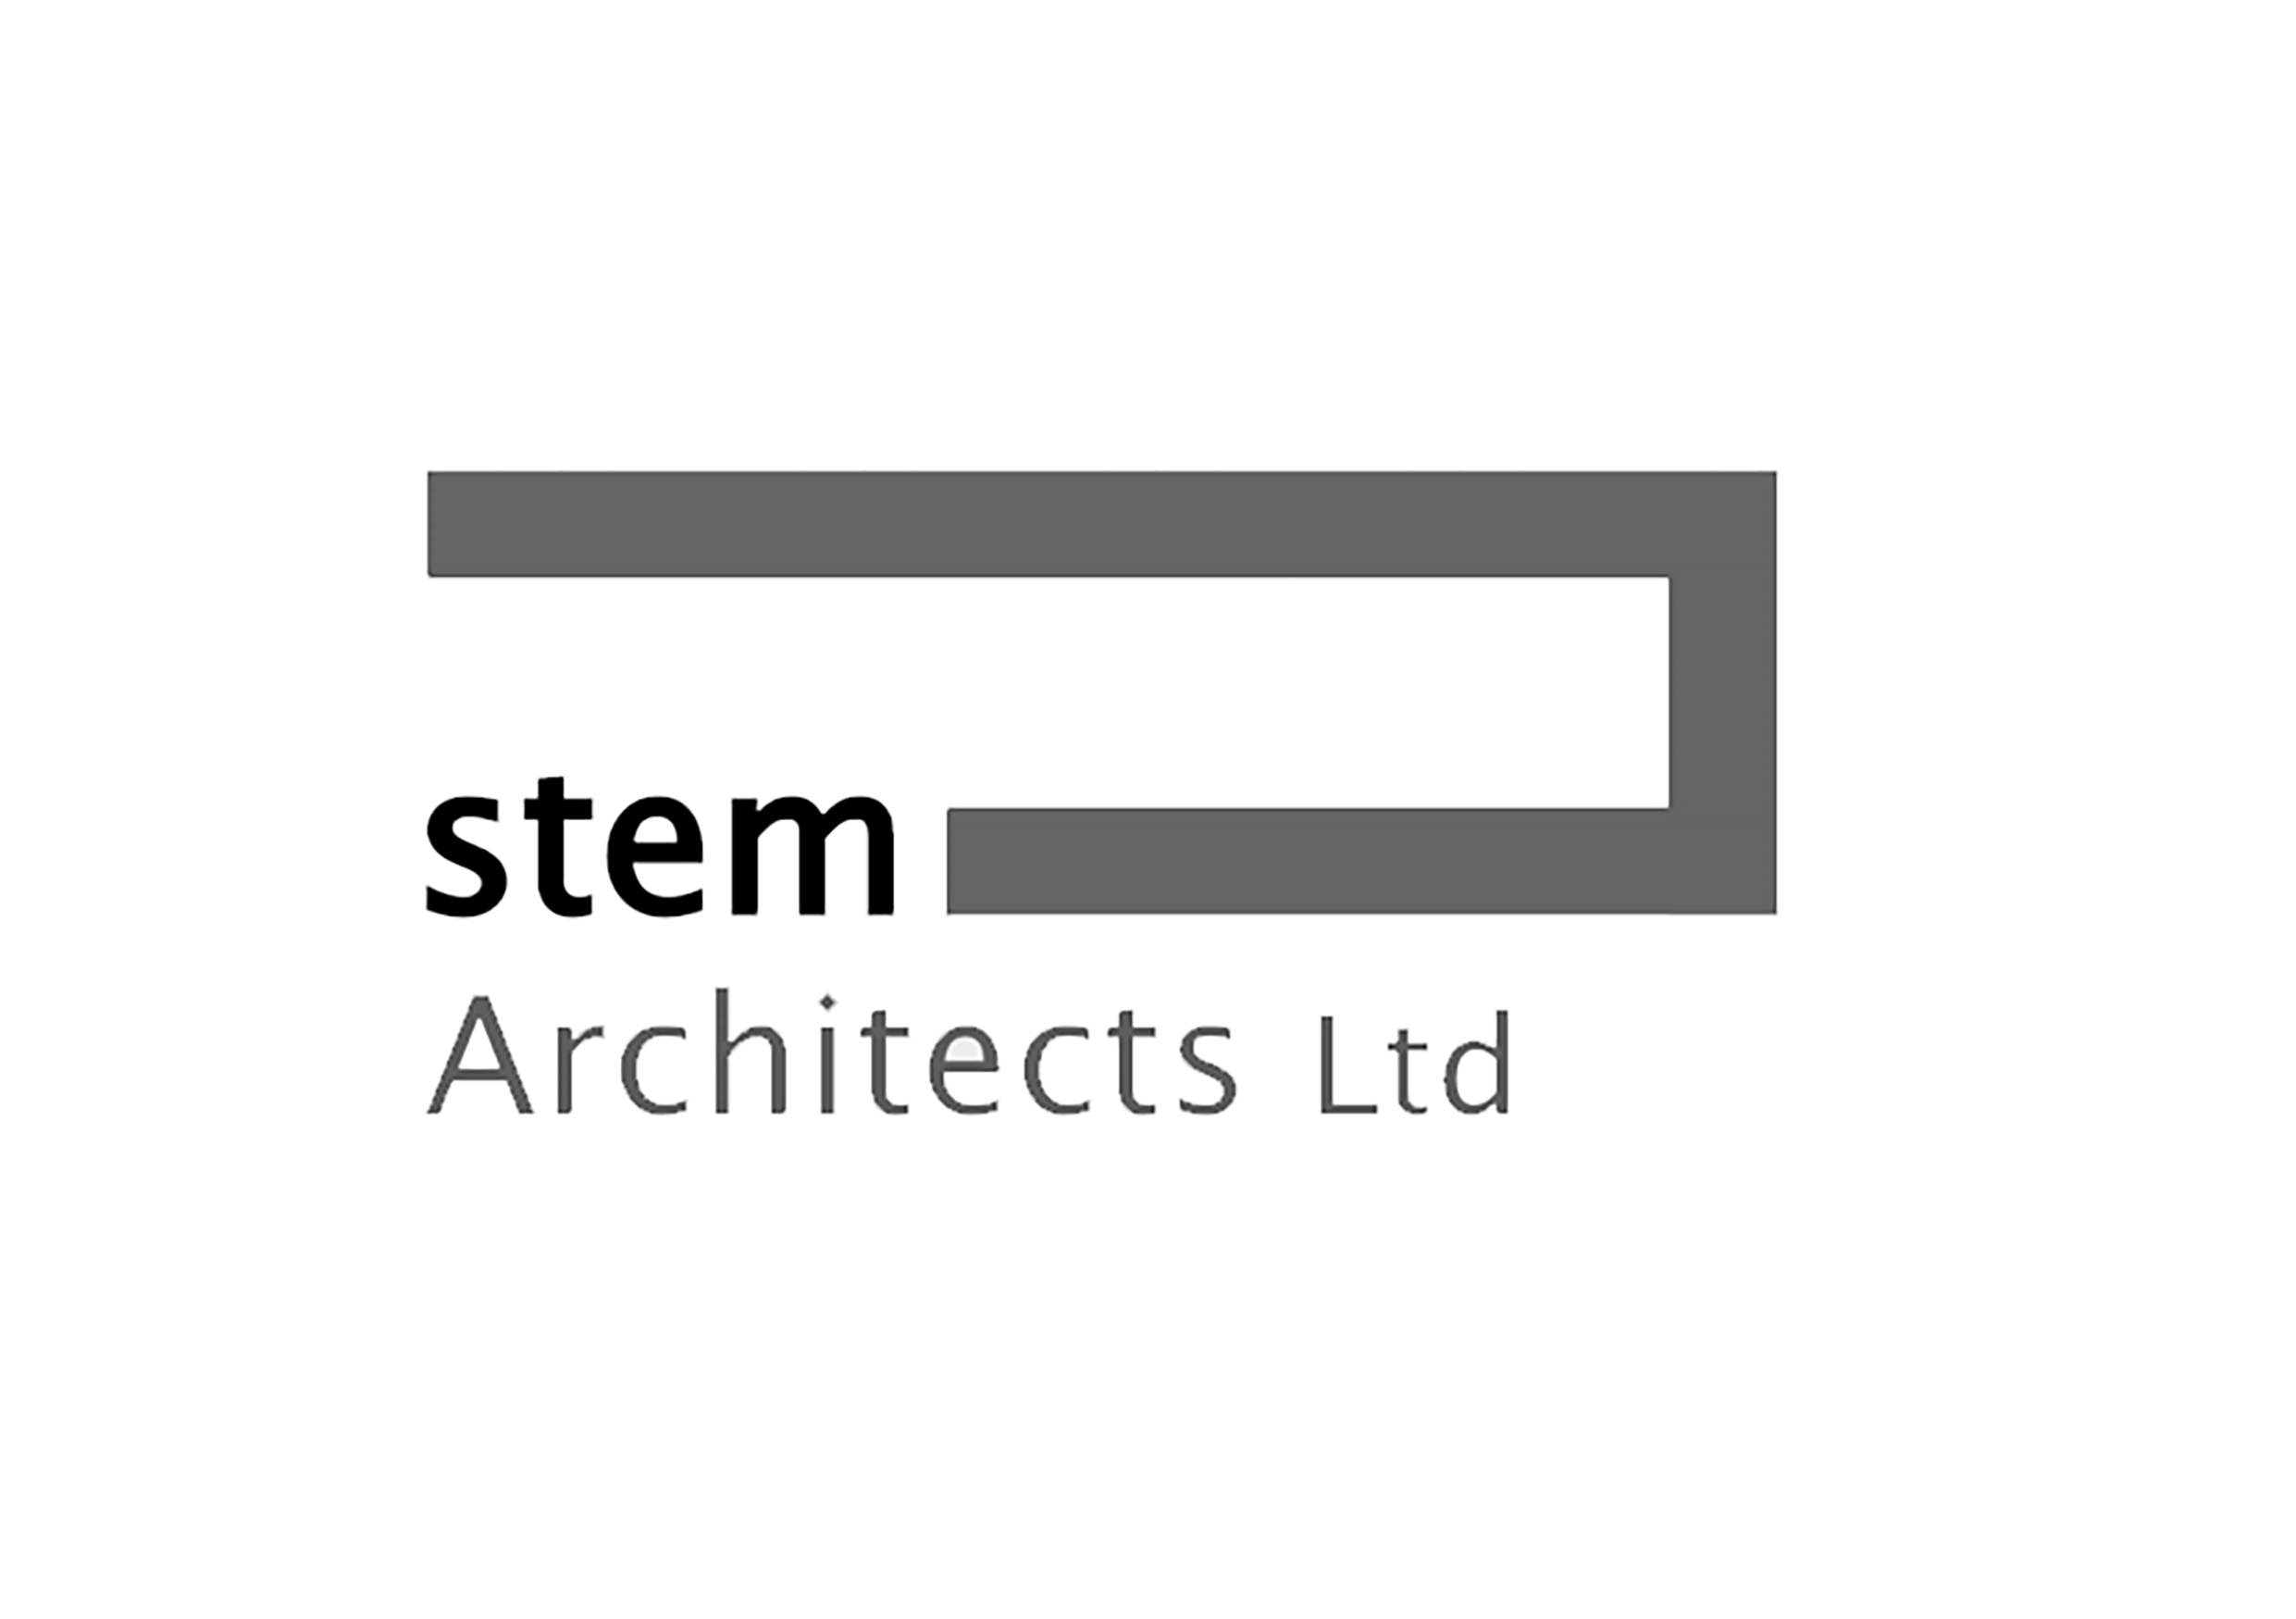 Stem Architects Ltd